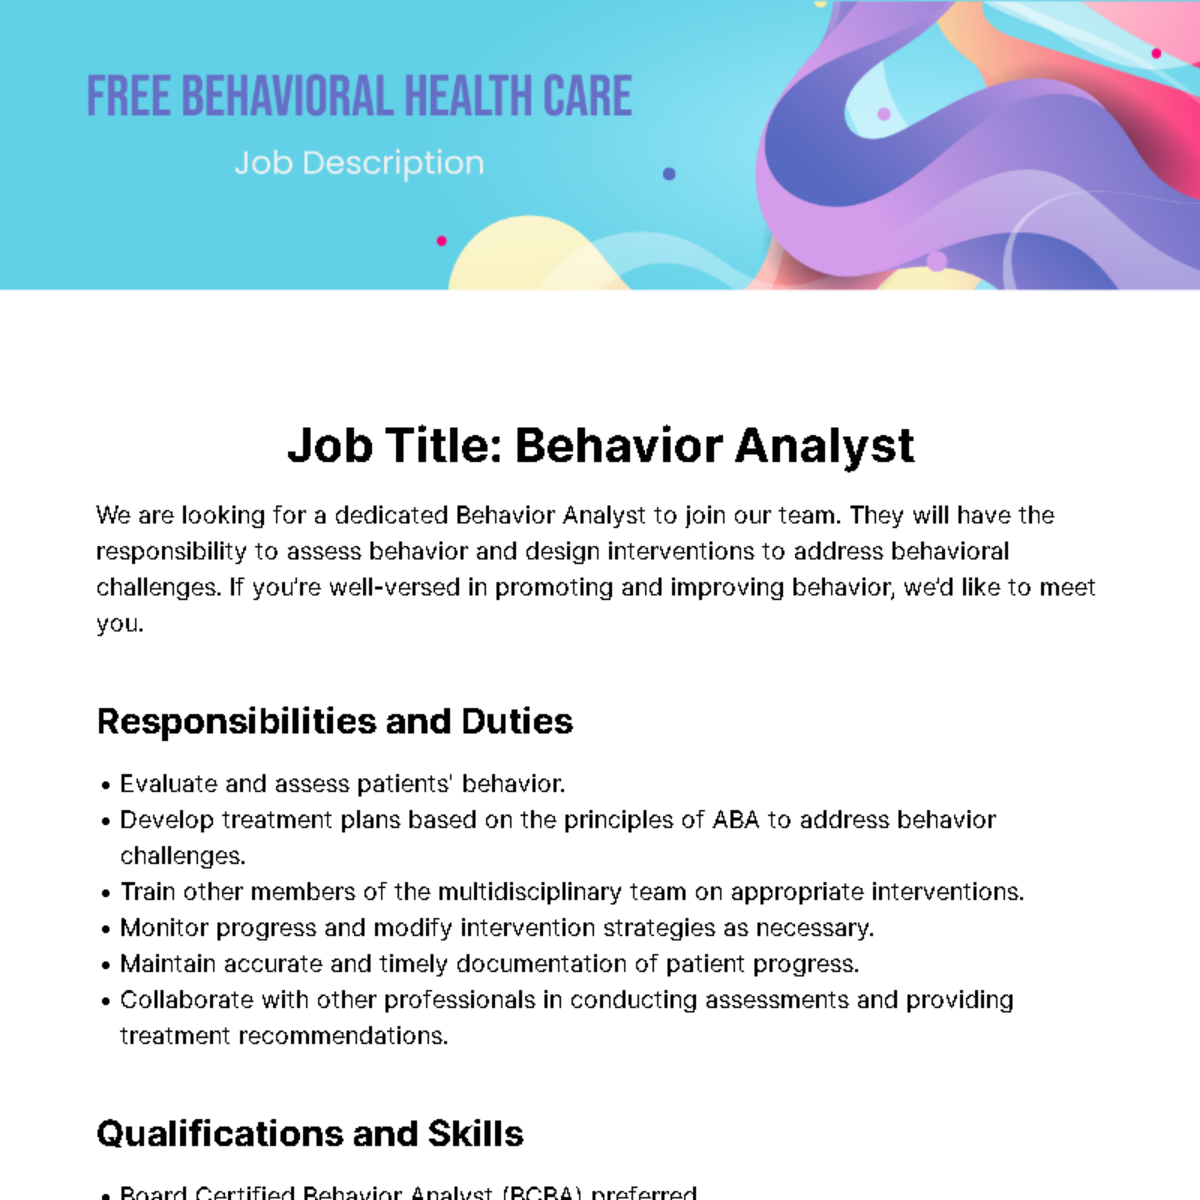 Free Behavioral Health Care Job Description Template